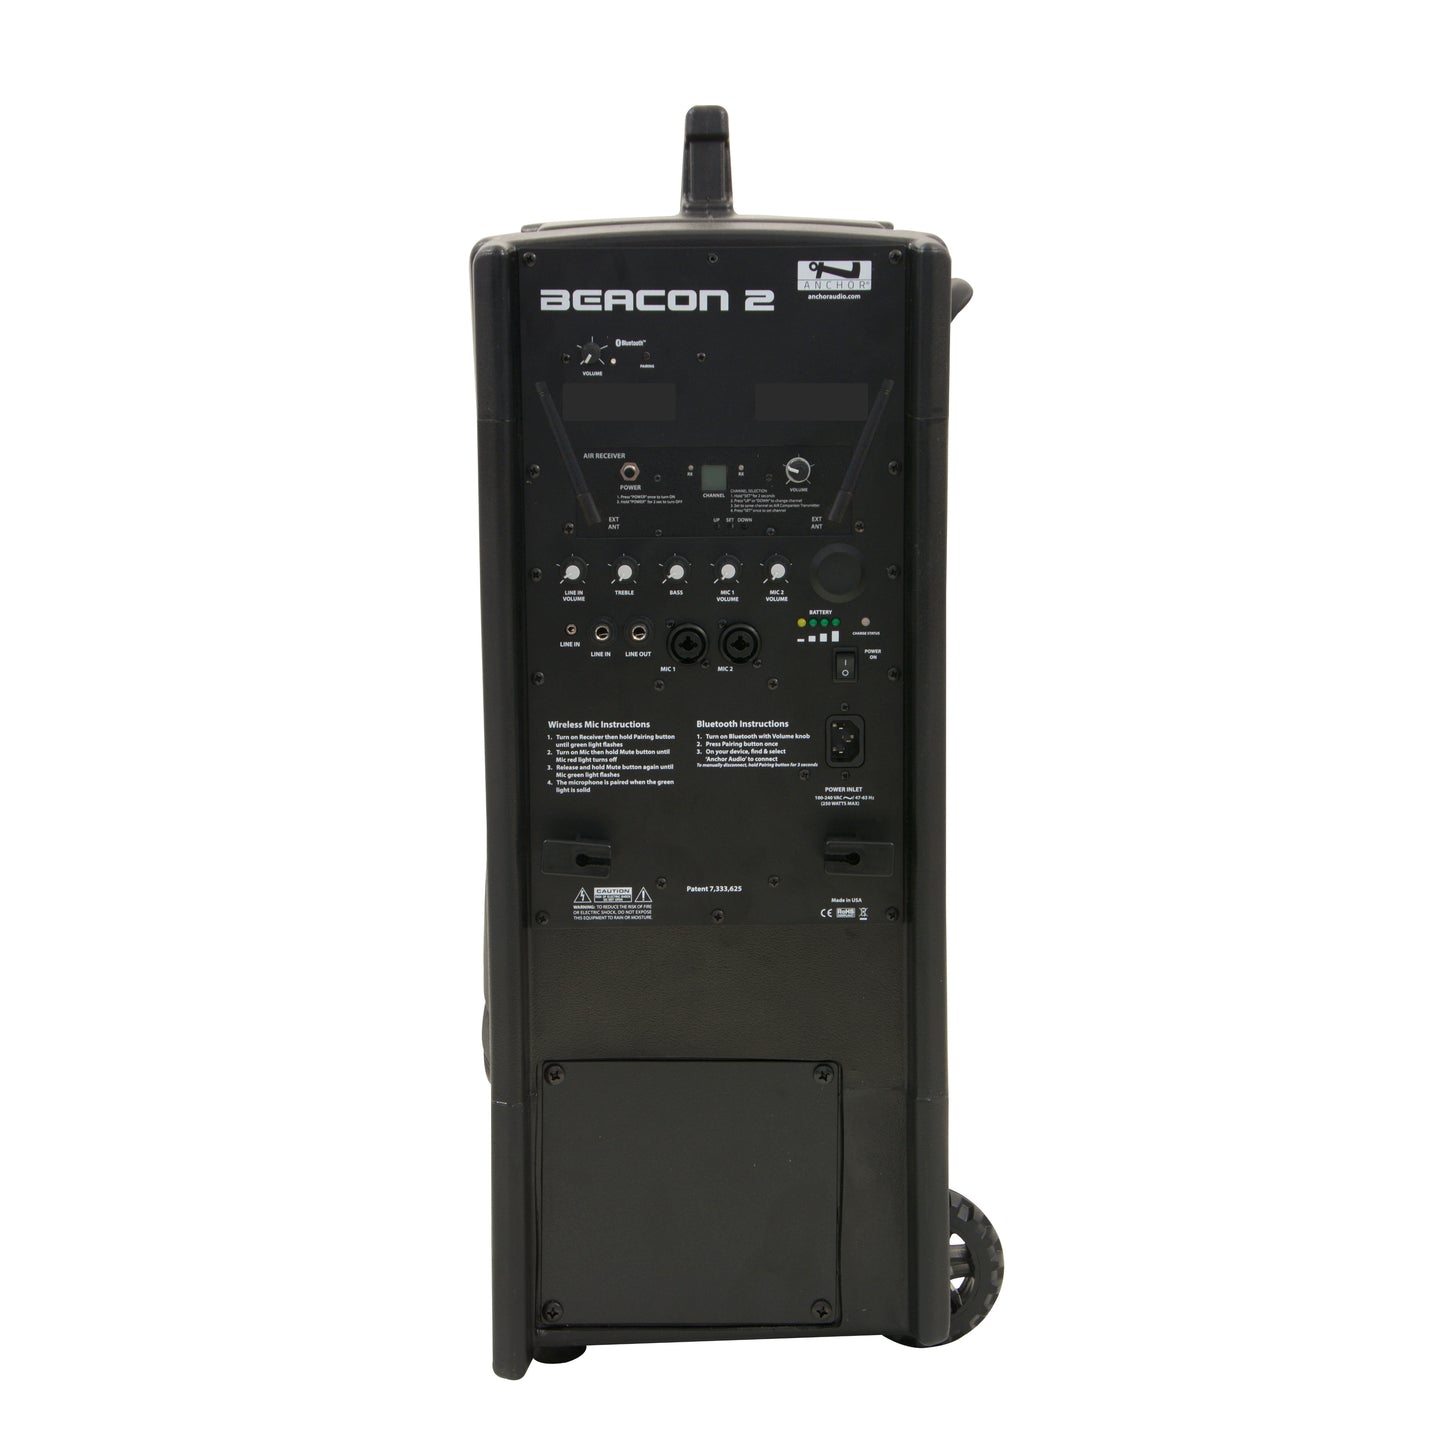 Beacon 2 Sound System